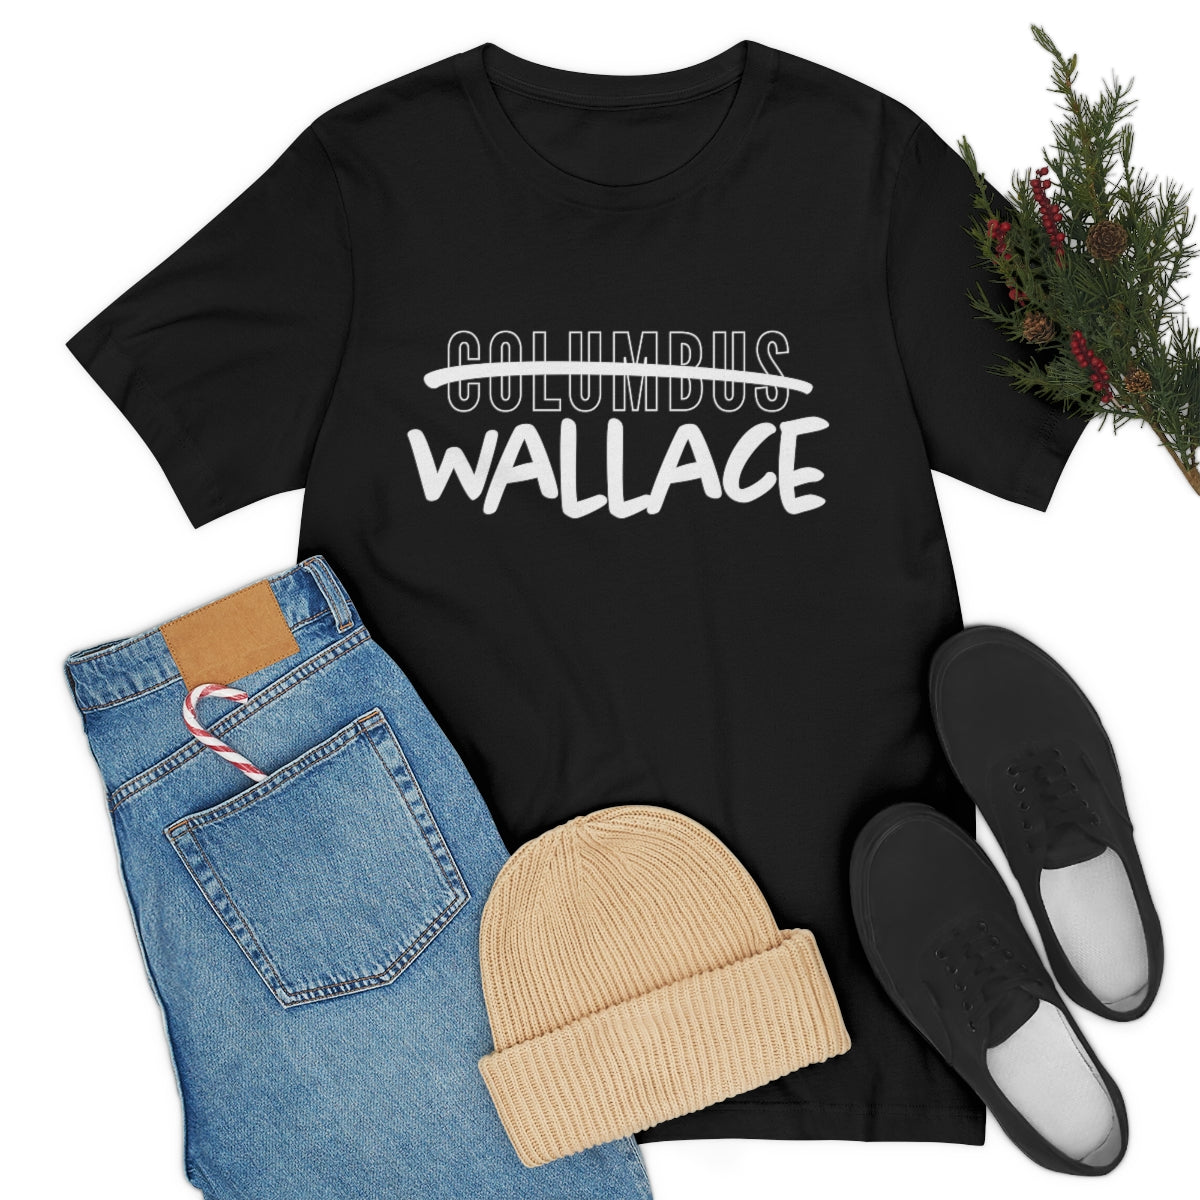 Wallace > Columbus tee